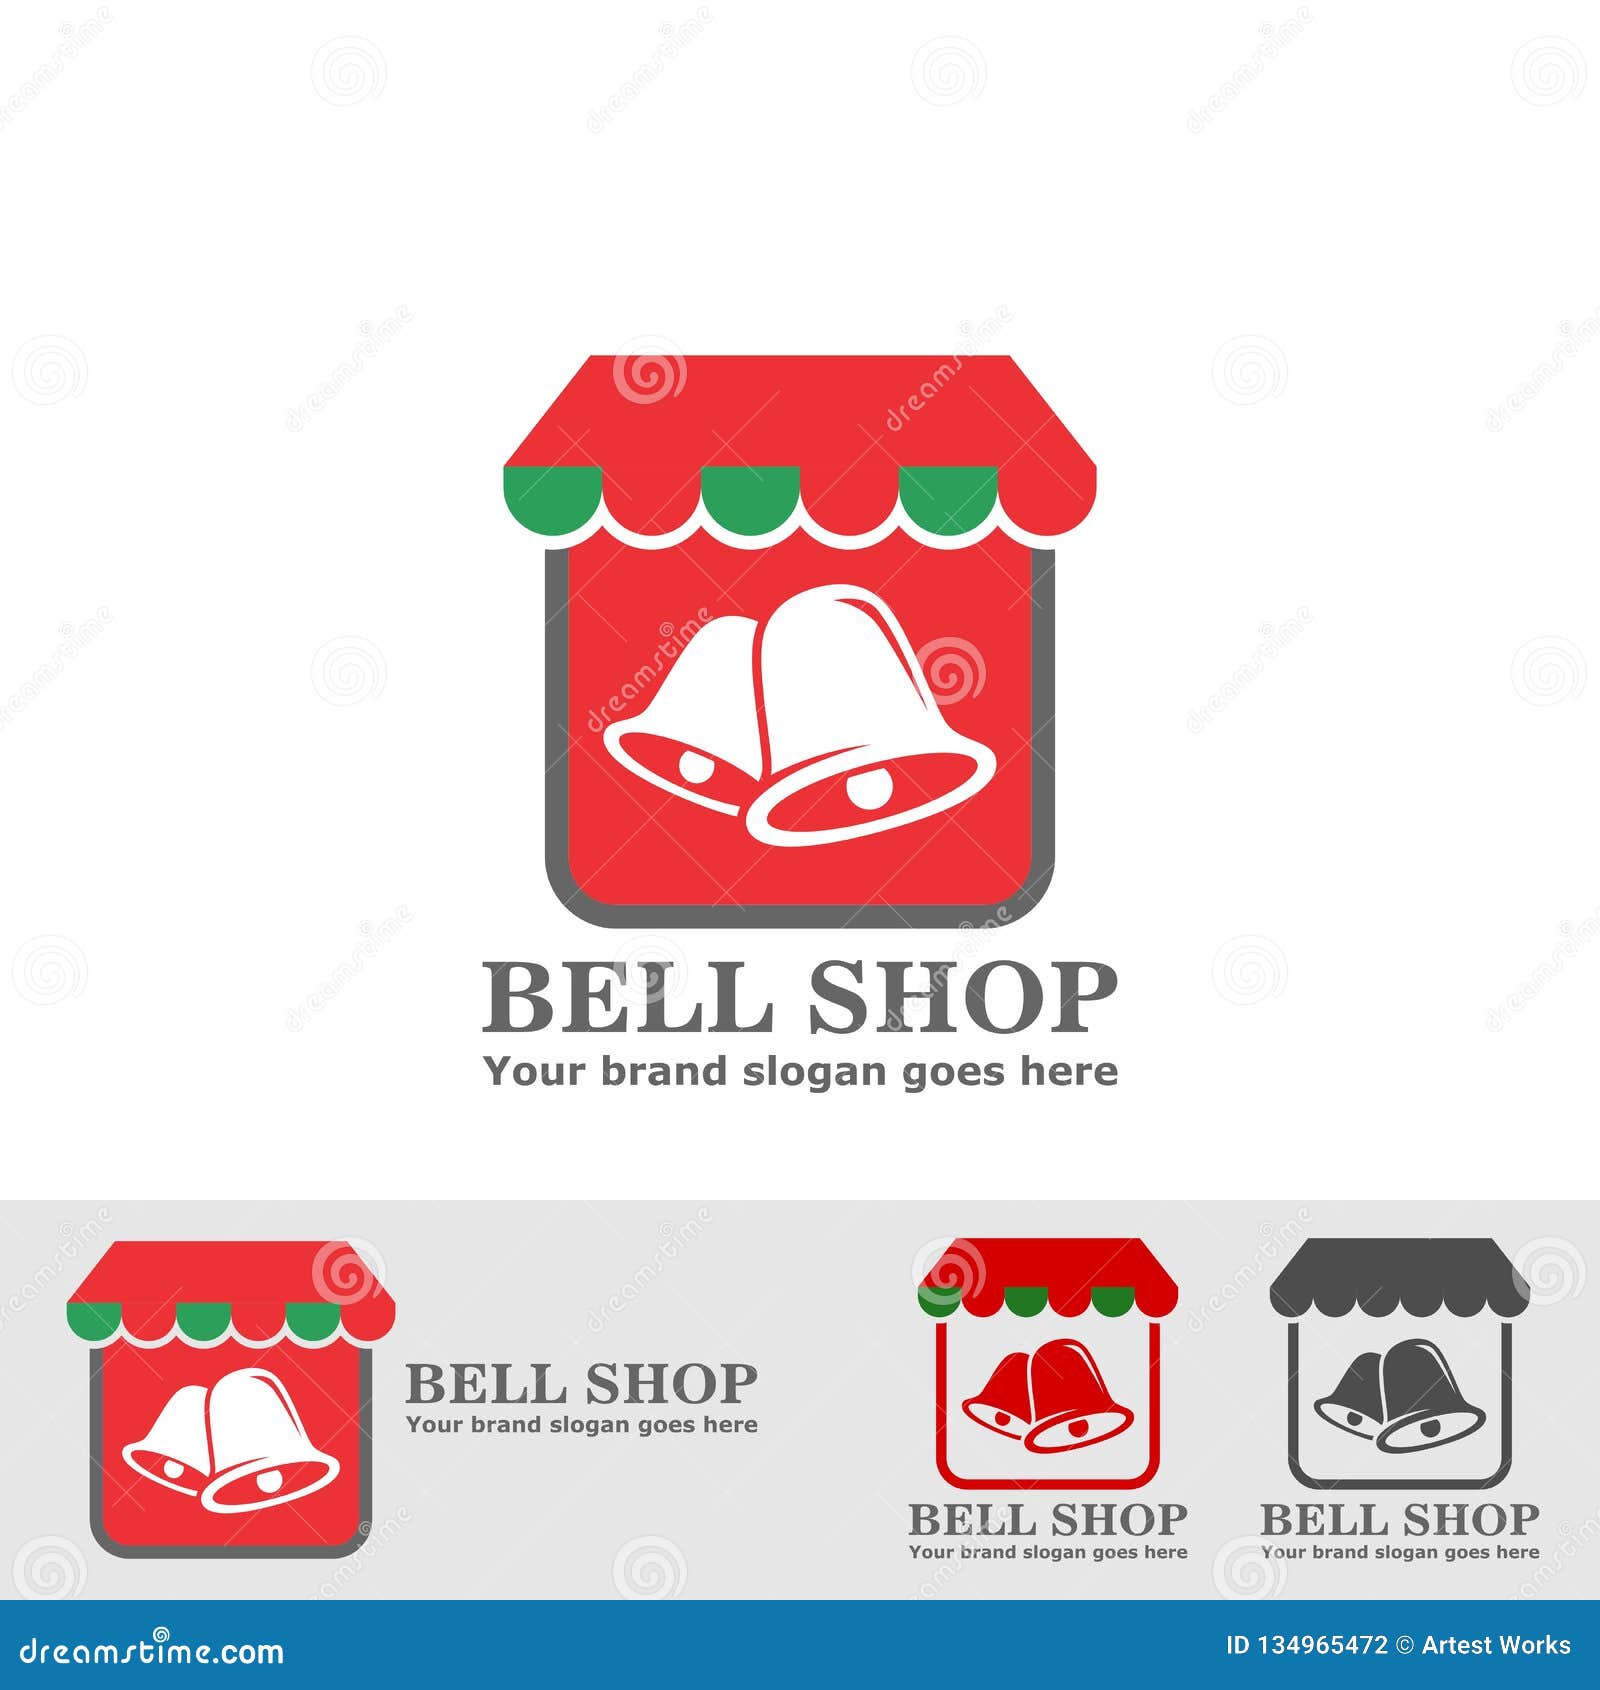 Absoluut Ijzig Kent Bell shop logo stock vector. Illustration of classic - 134965472